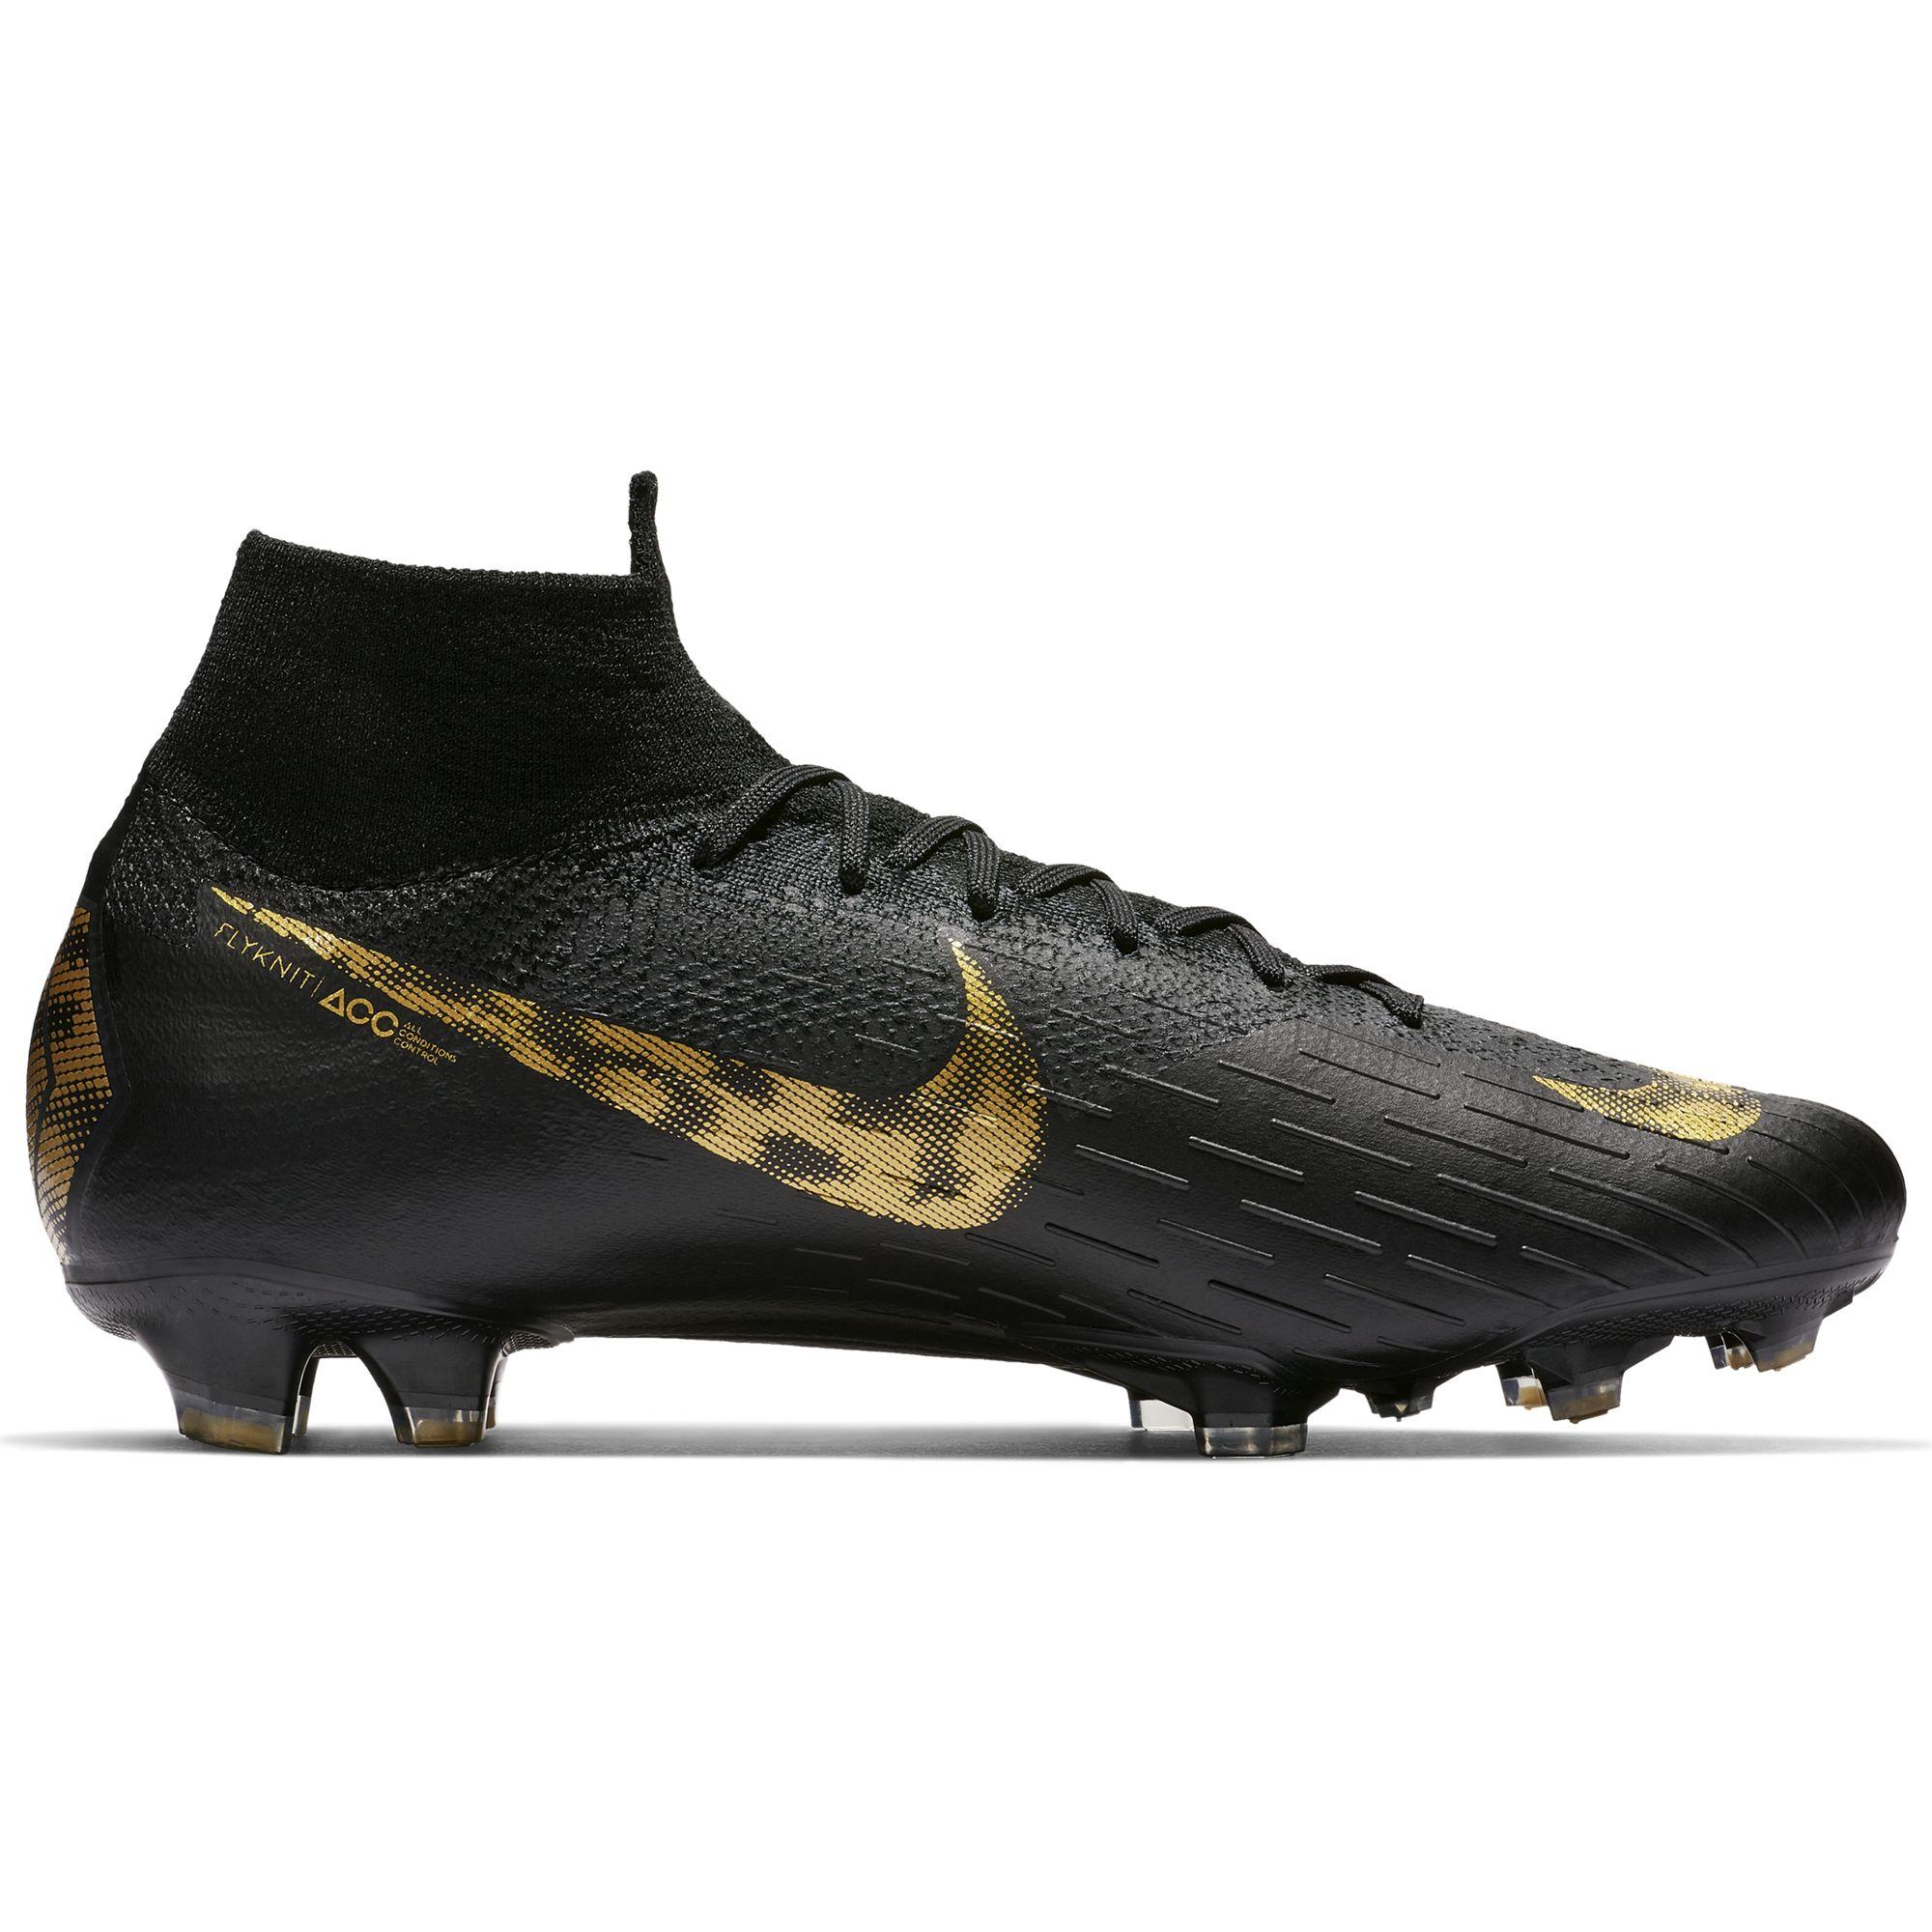 Nike Chaussures De Football Superfly 6 Elite Fg